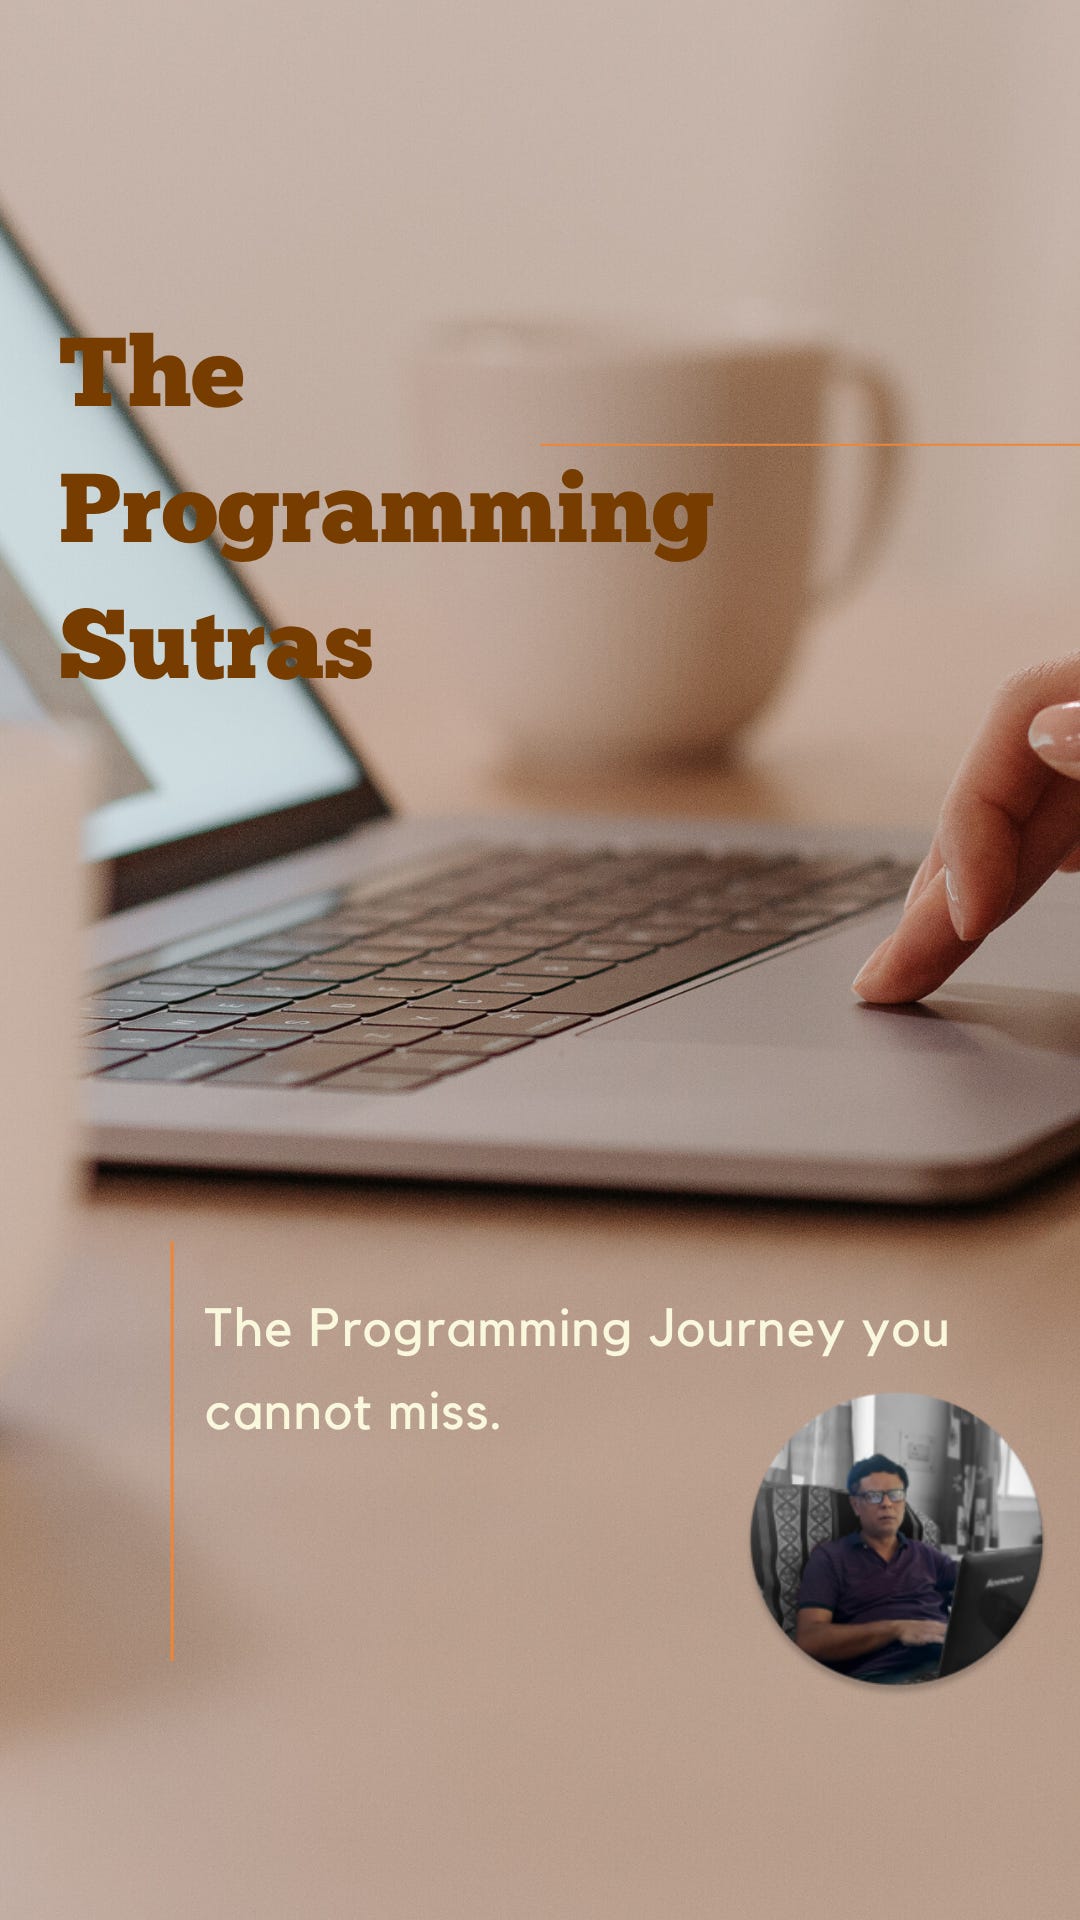 Starting the Programming Journey